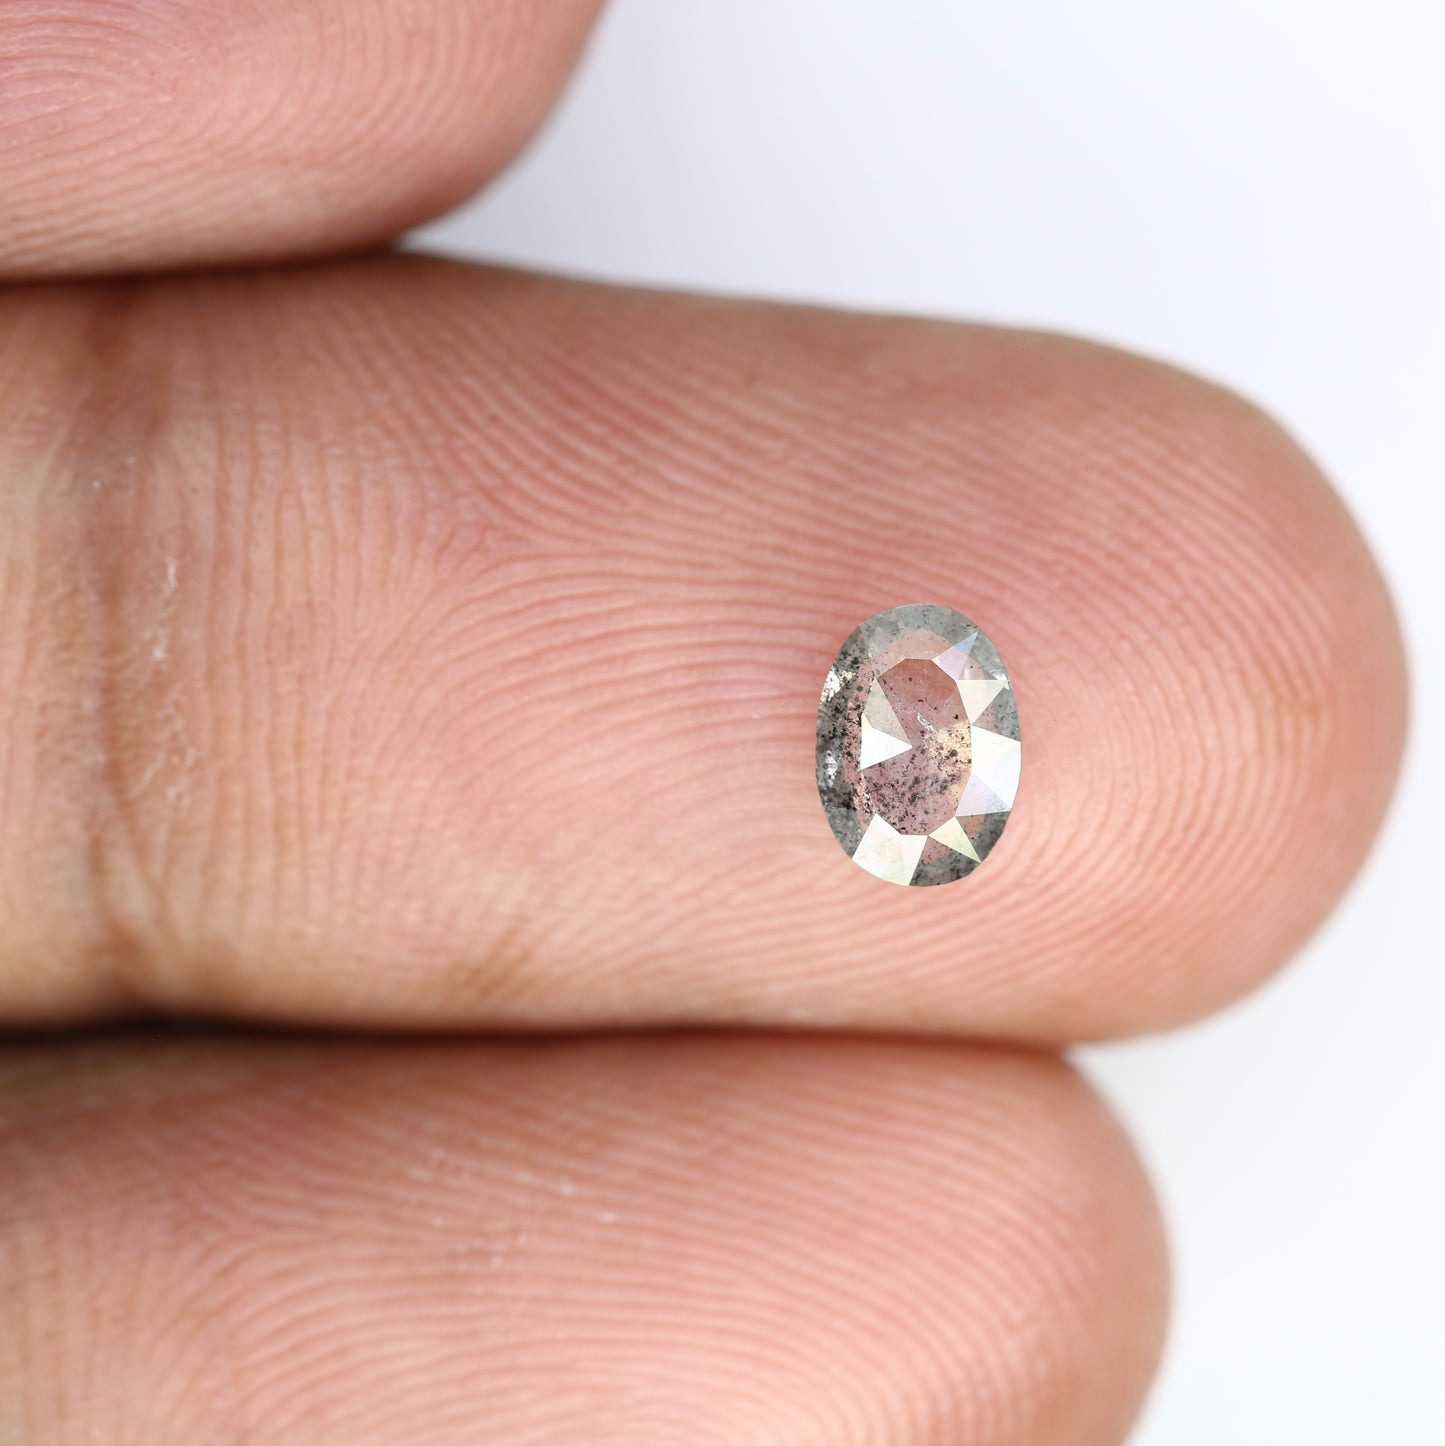 0.42 Carat Oval Cut Diamond Salt And Pepper Diamond For Galaxy Ring